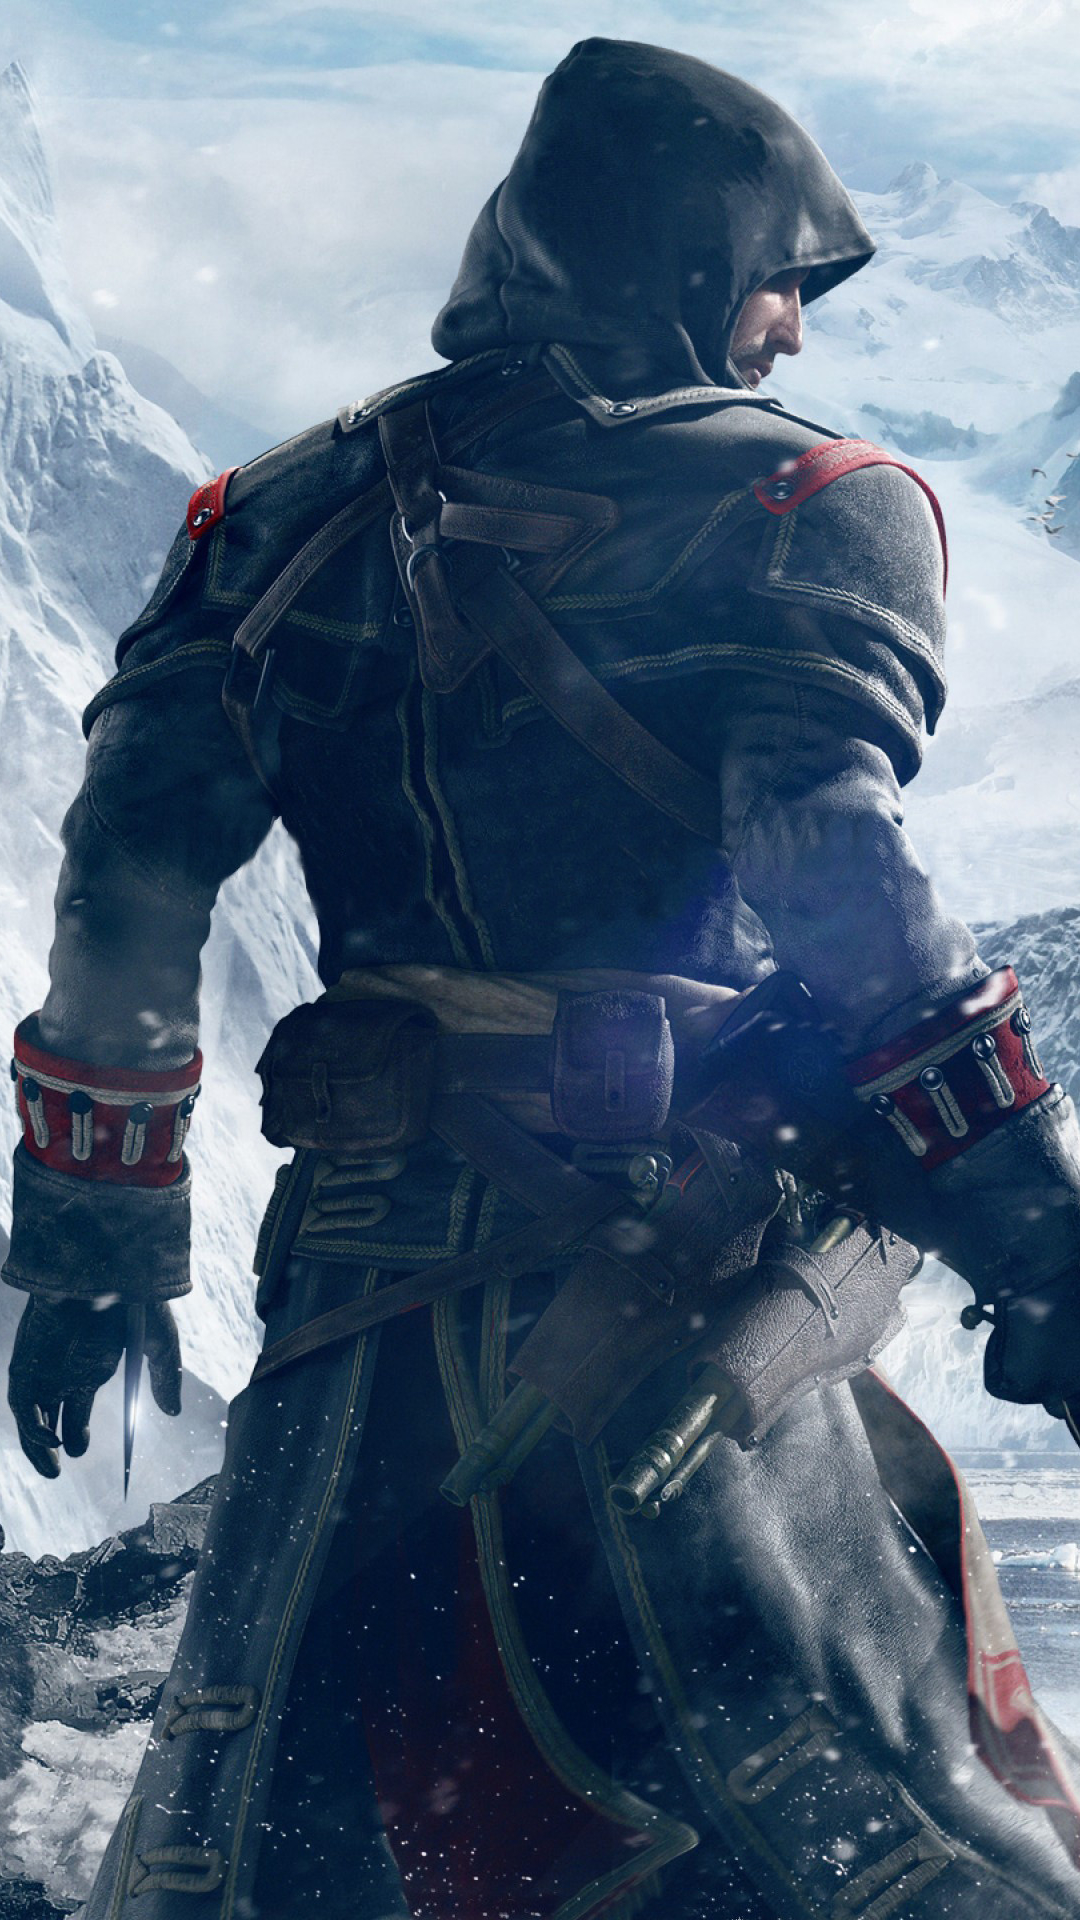 Assassin's Creed Rogue Wallpapers - Wallpaper Cave